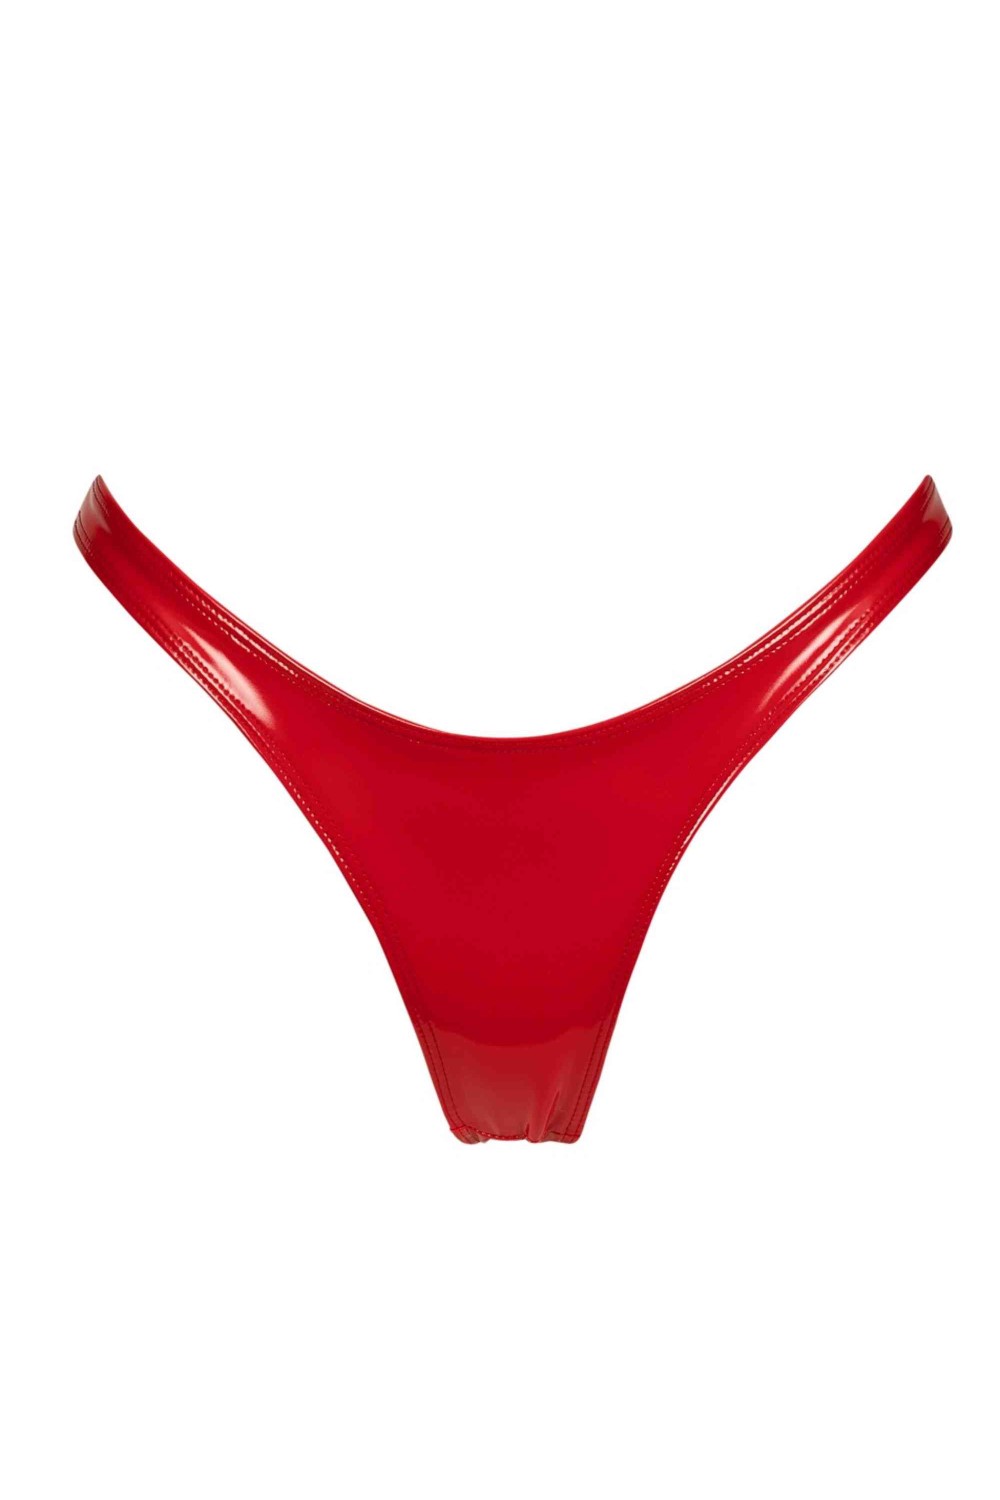 TWIFER Lingerie For Women G String Lingerie Underwear Thong Briefs